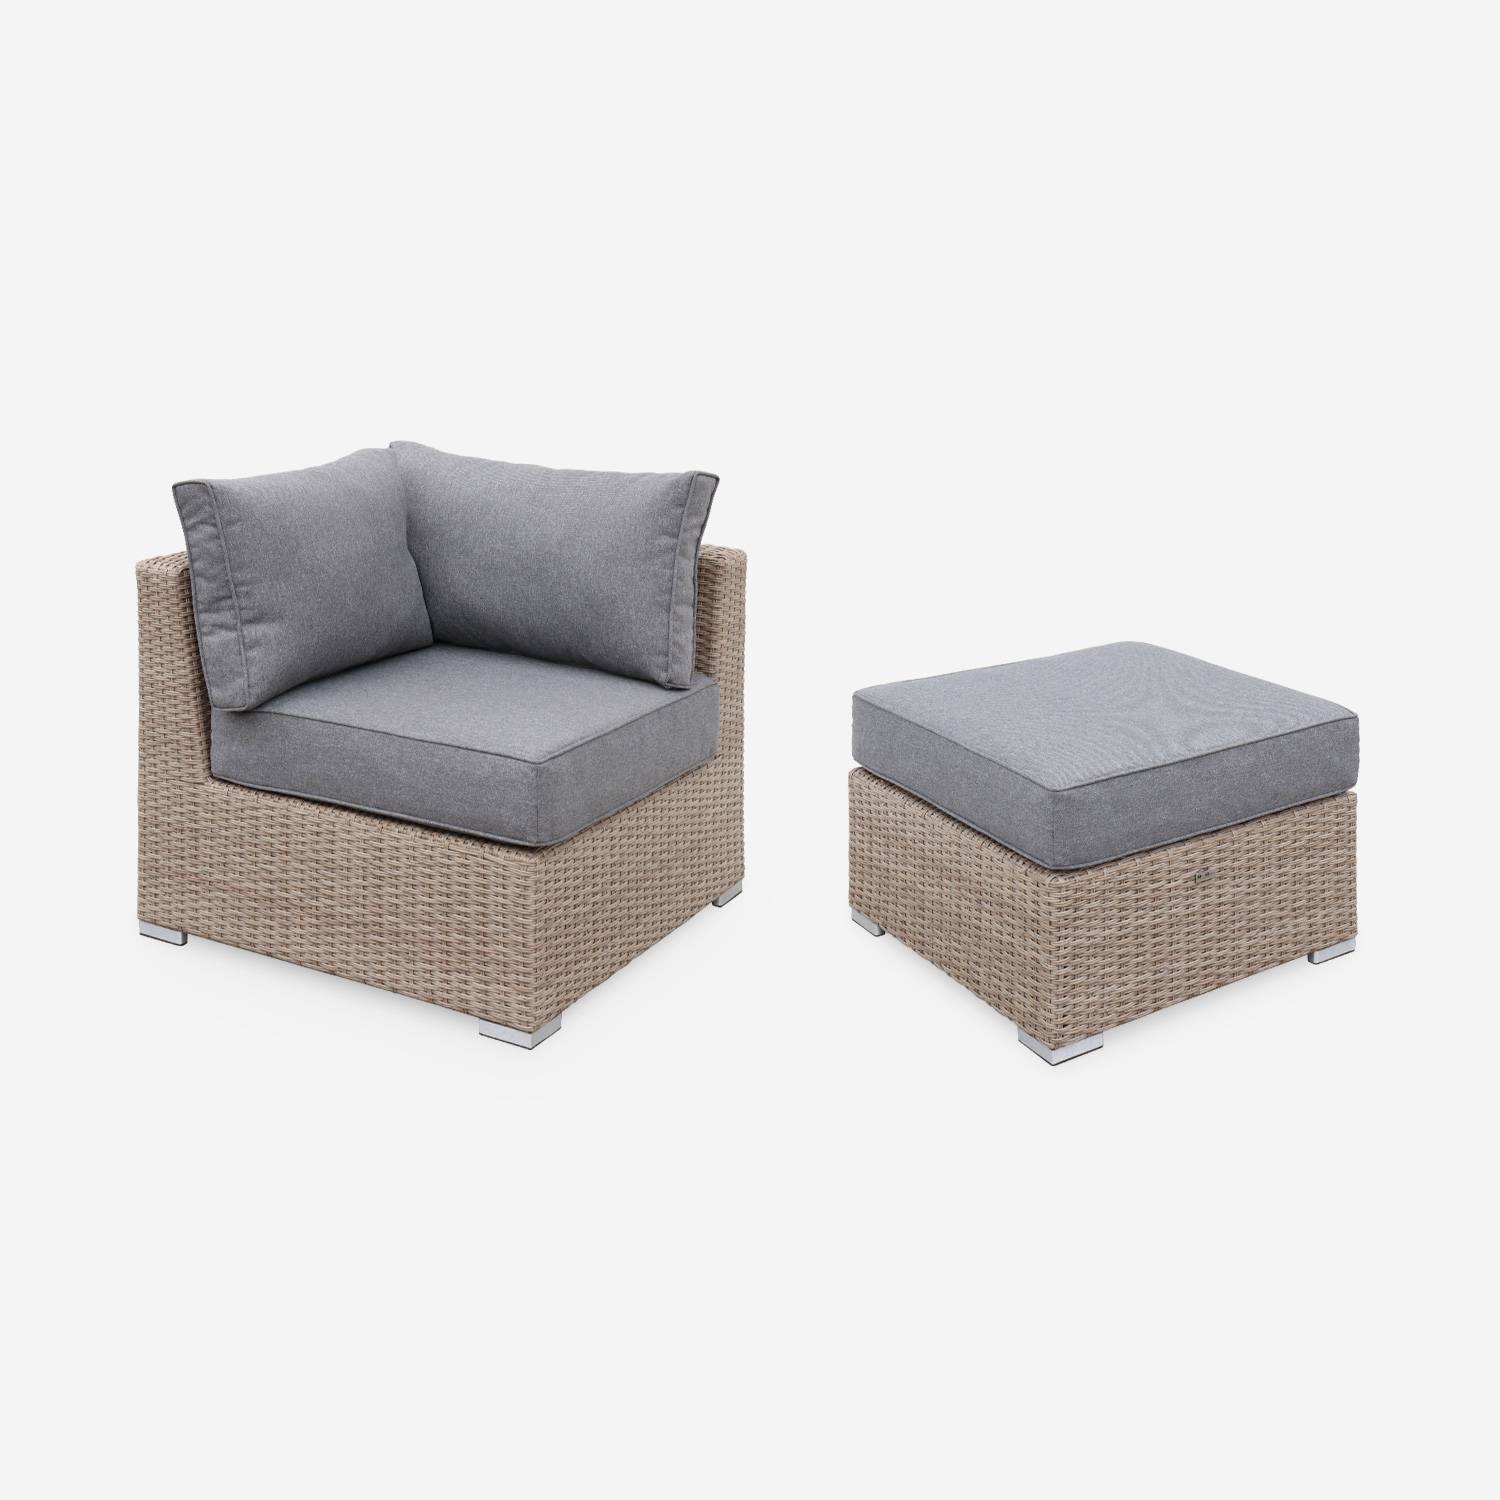 Ready assembled 5-seater deluxe polyrattan modular garden sofa set with armchair, footrest, table,  Natural rattan & Aluminium, VINCI  Photo5